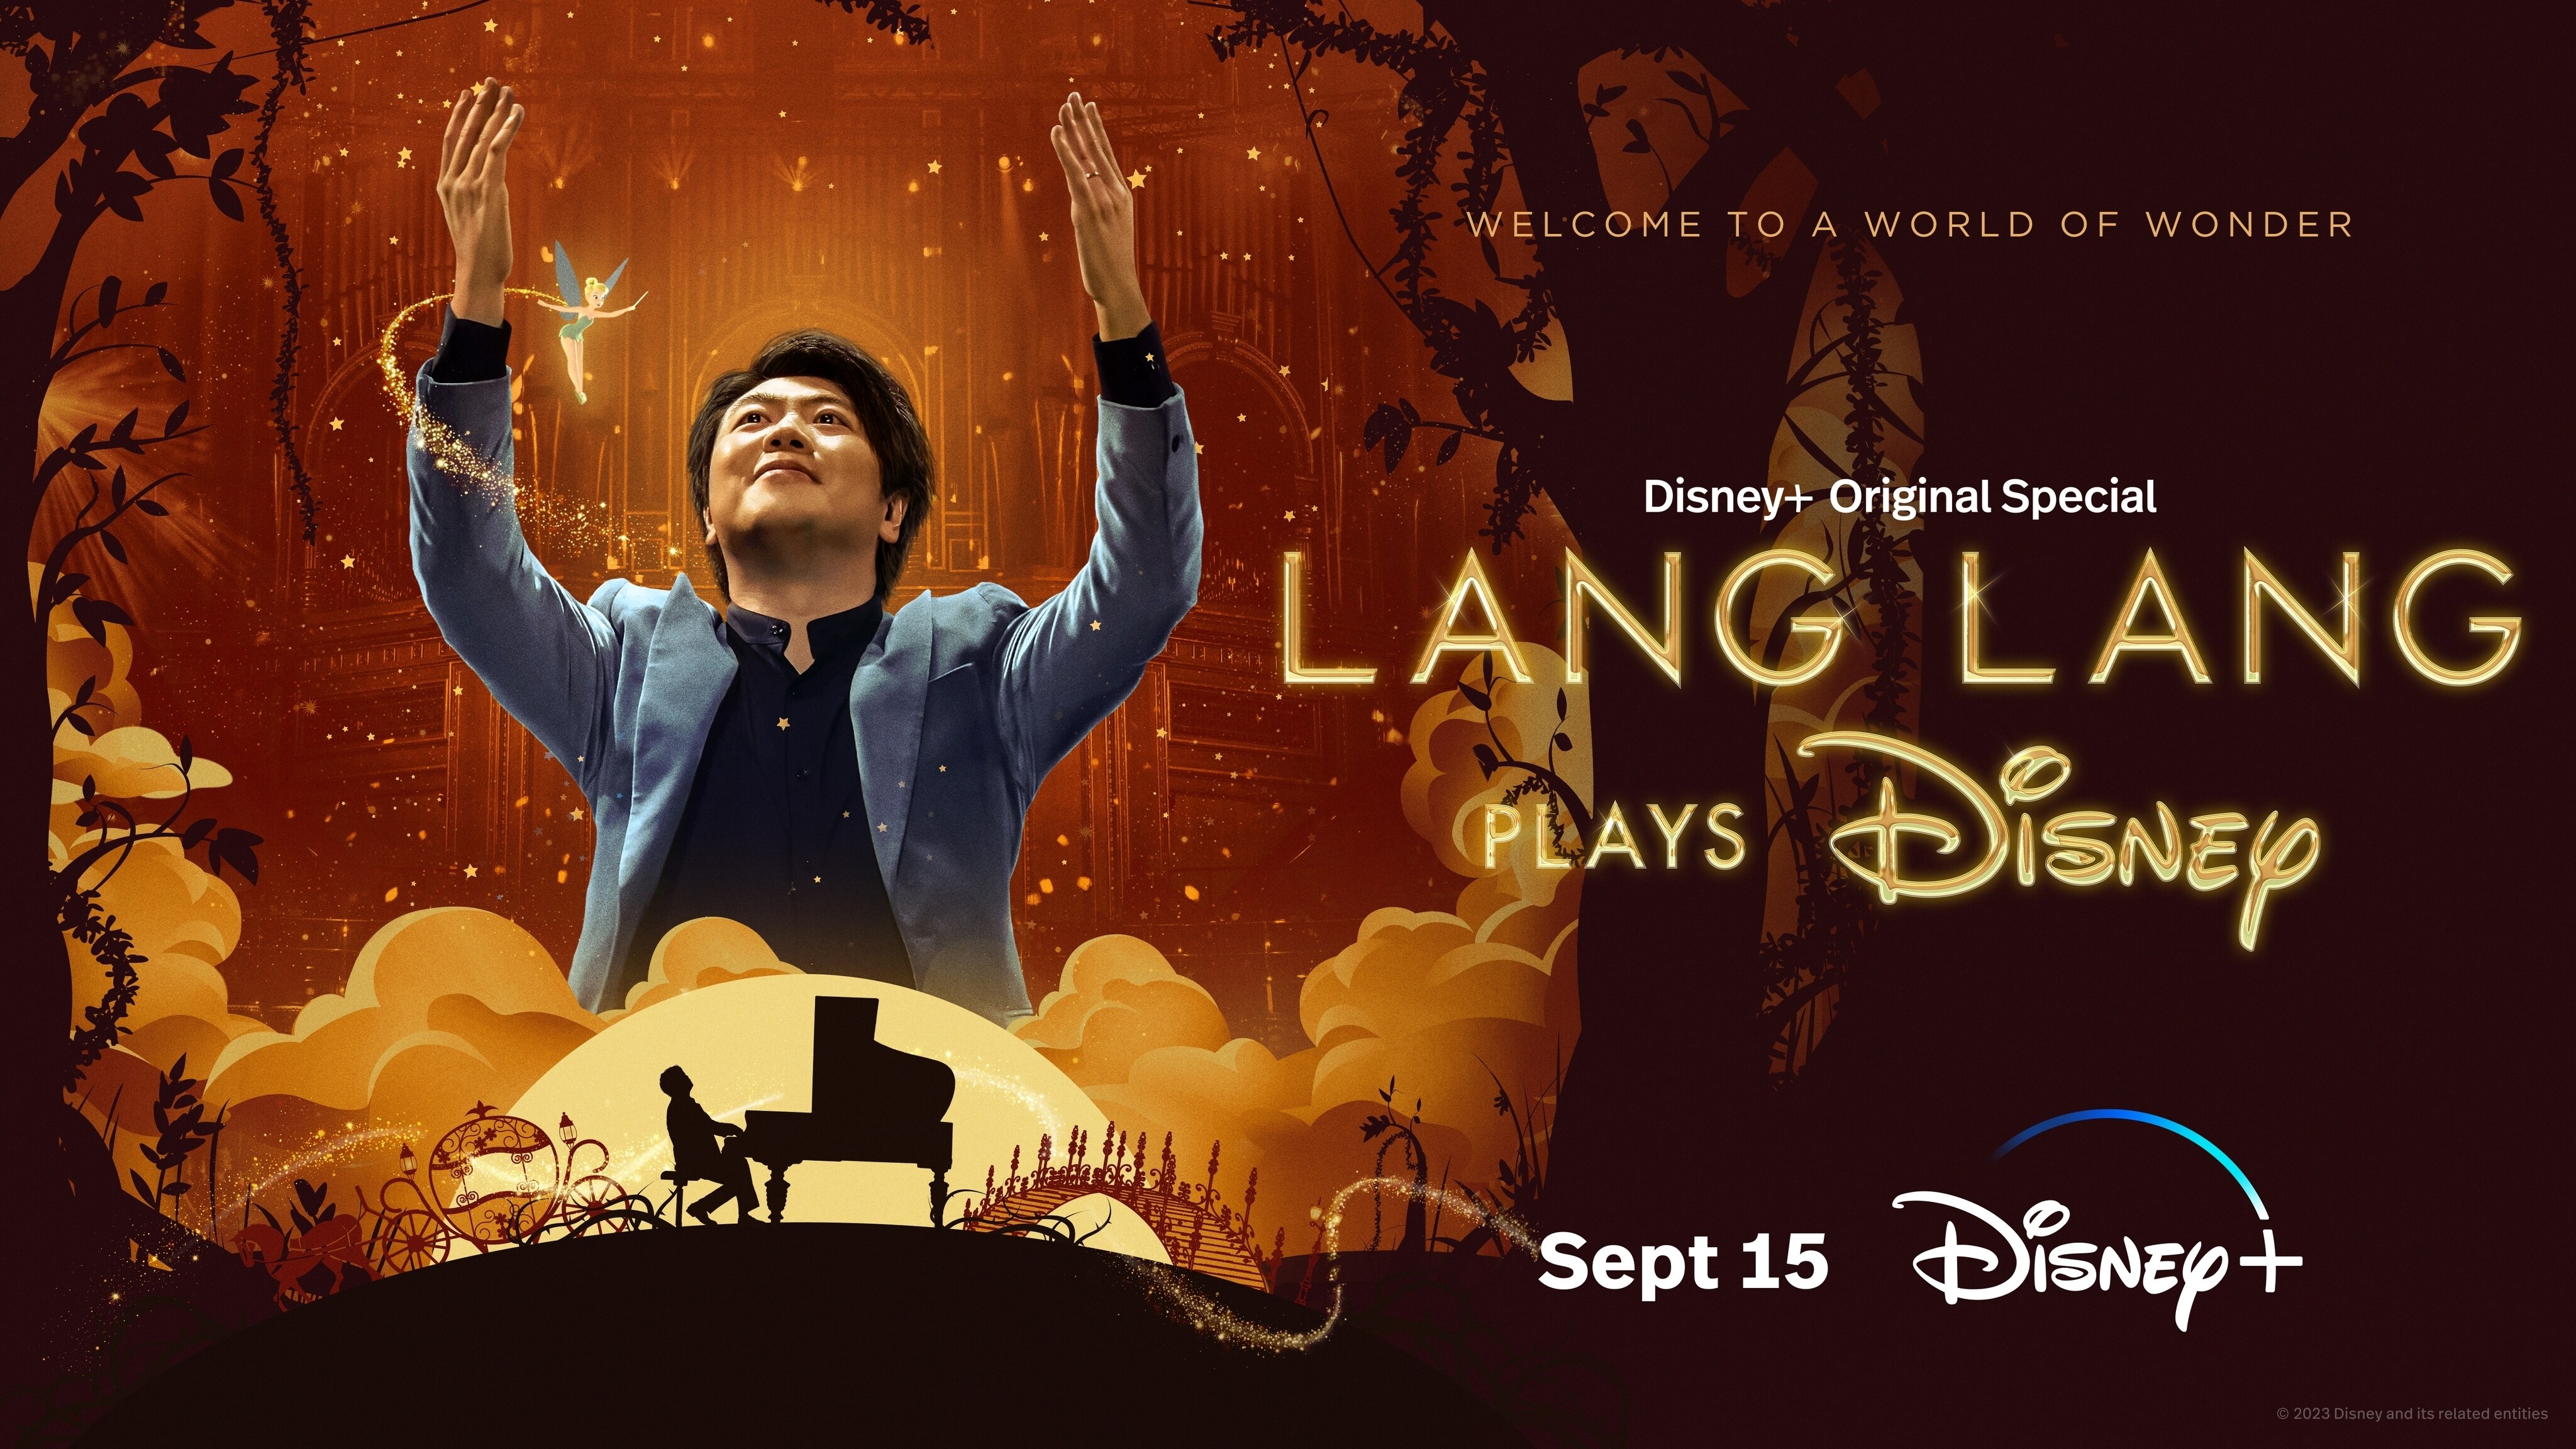 Lang Lang Plays Disney Key Art